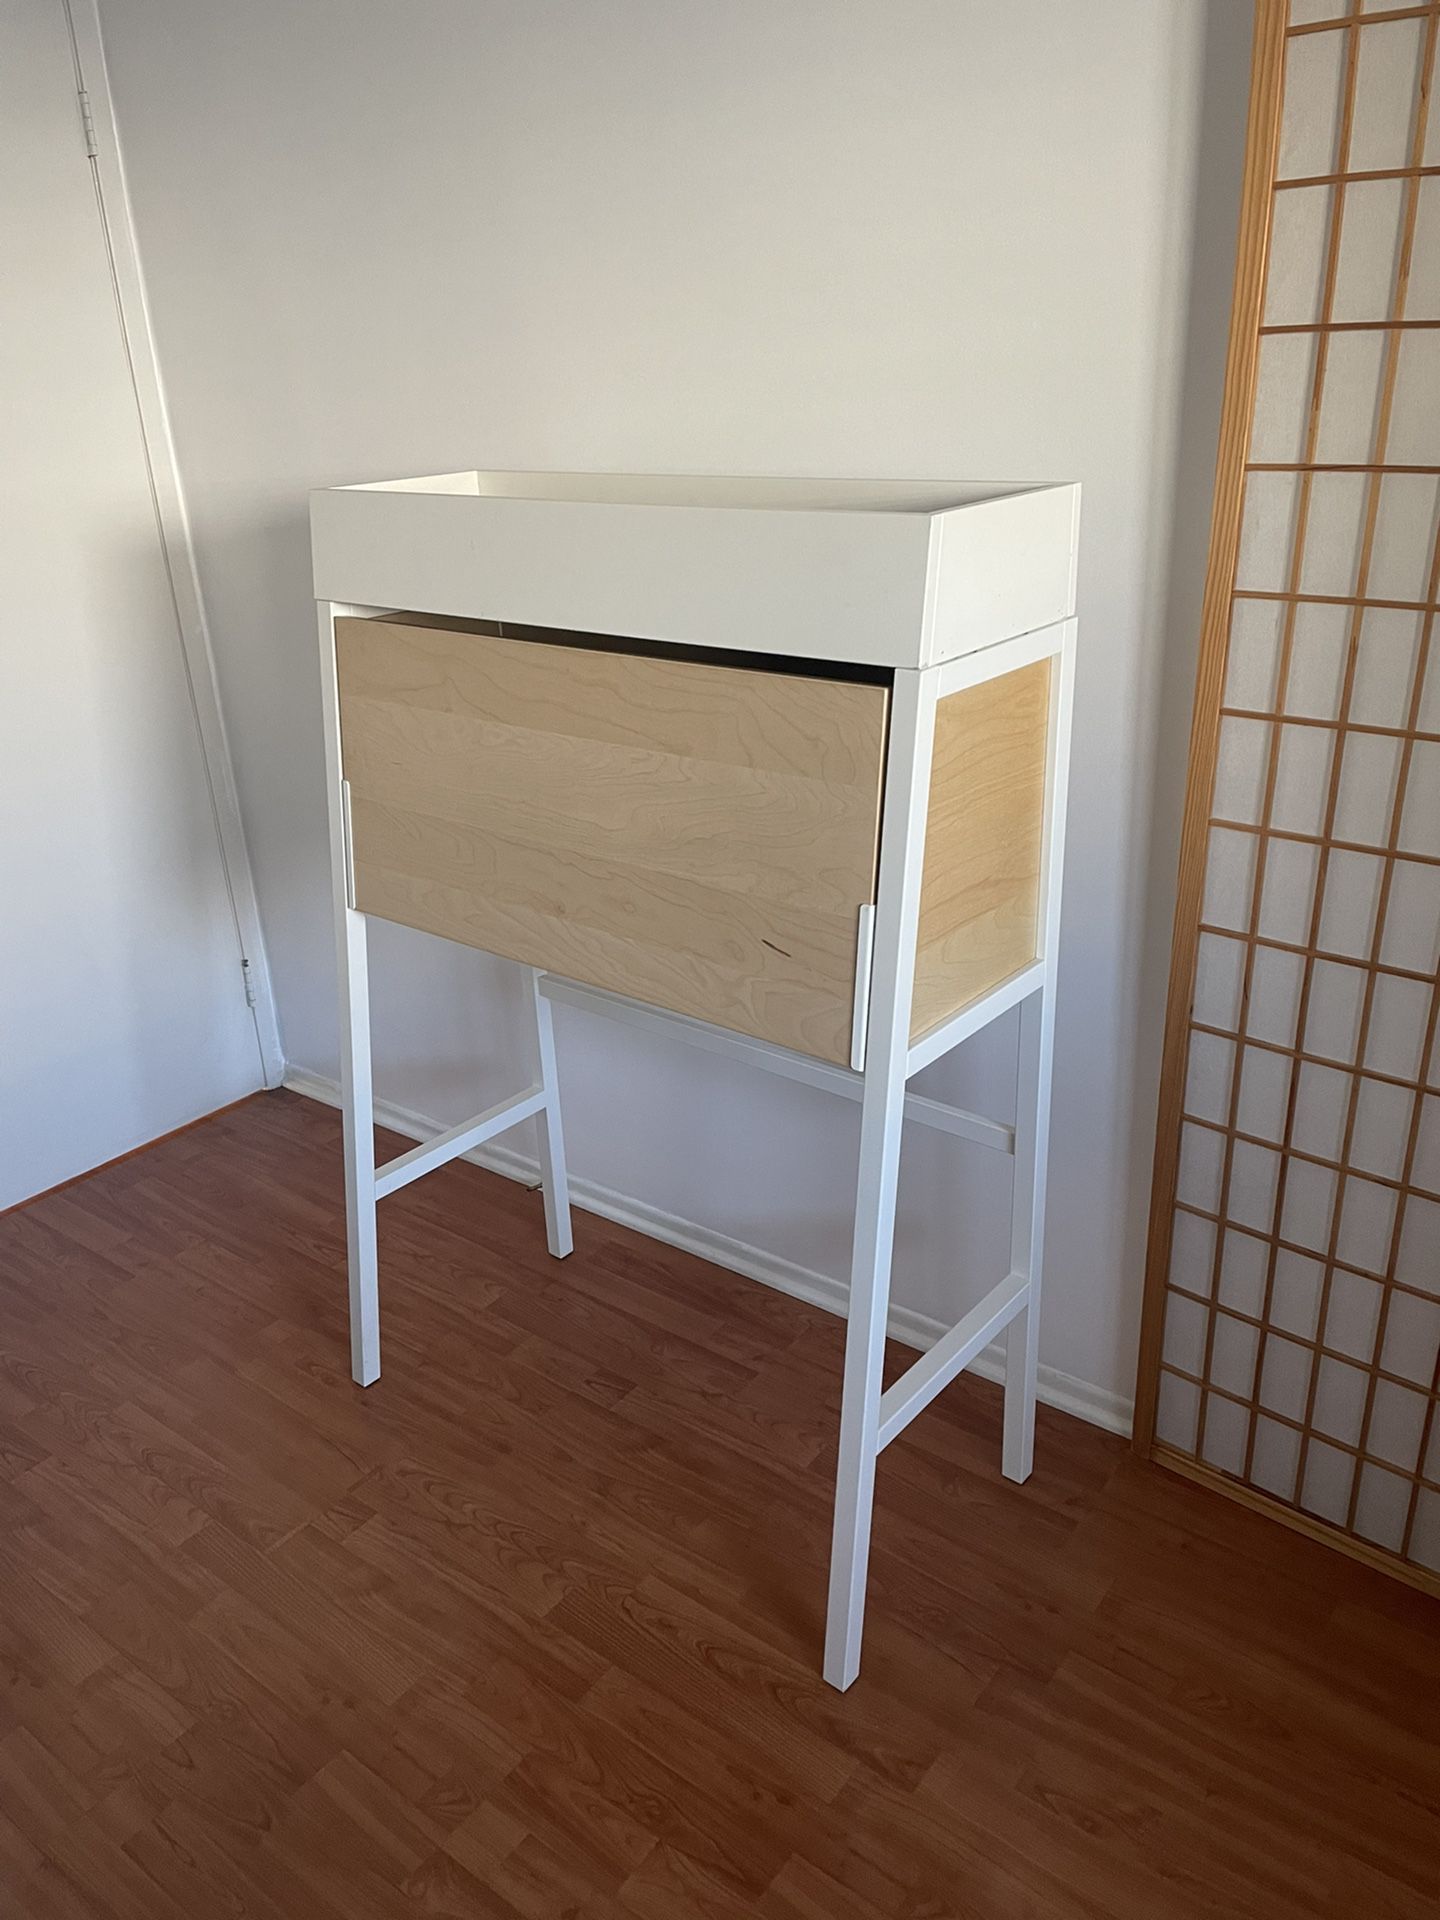 IKEA Folding Desk - PS 2014 Secretary Desk